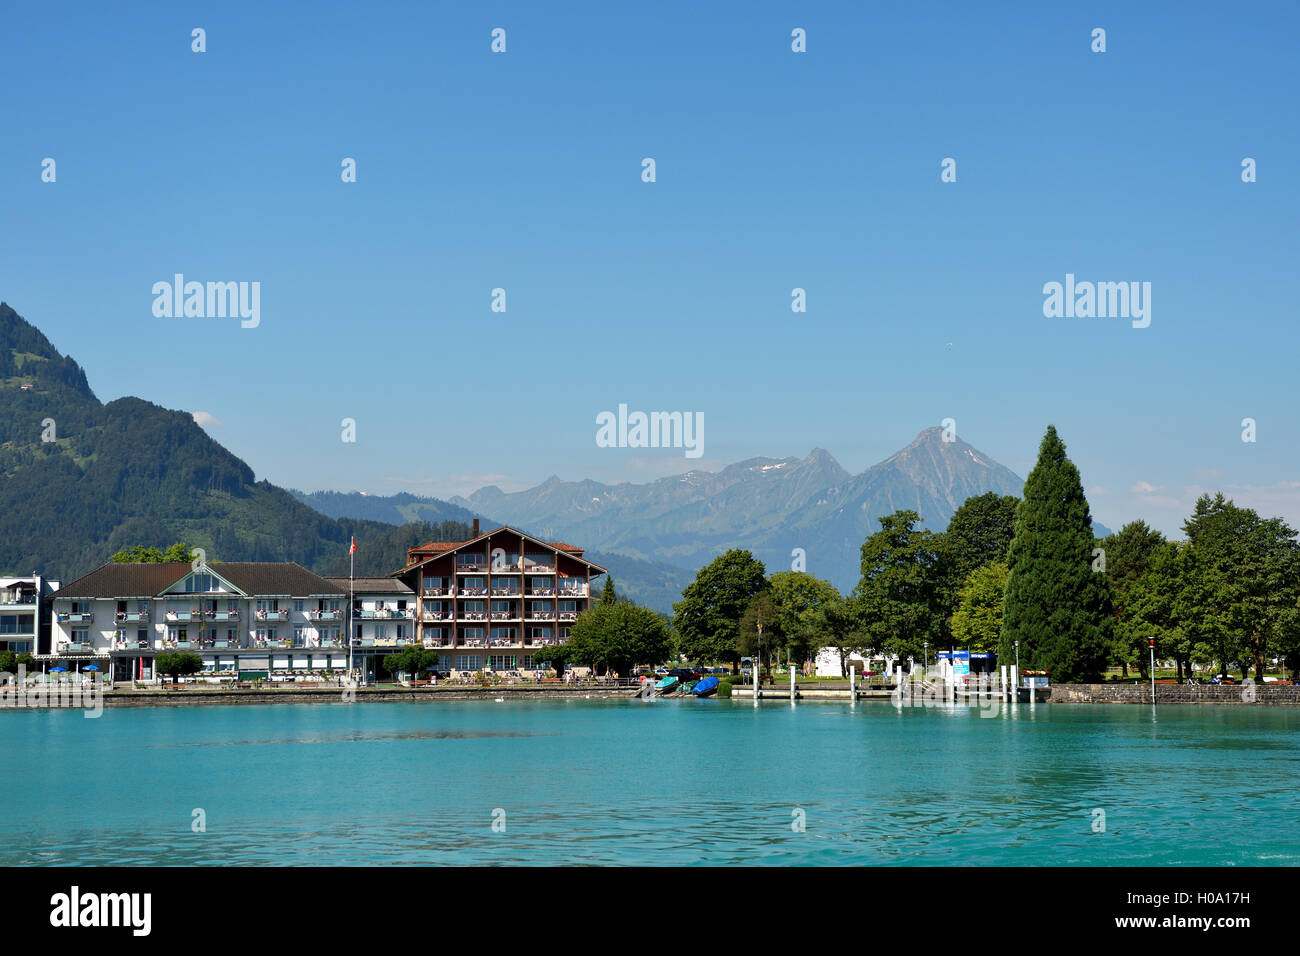 Promenade with jetty, Bönigen, Lake Brienz, Canton of Bern, Switzerland Stock Photo